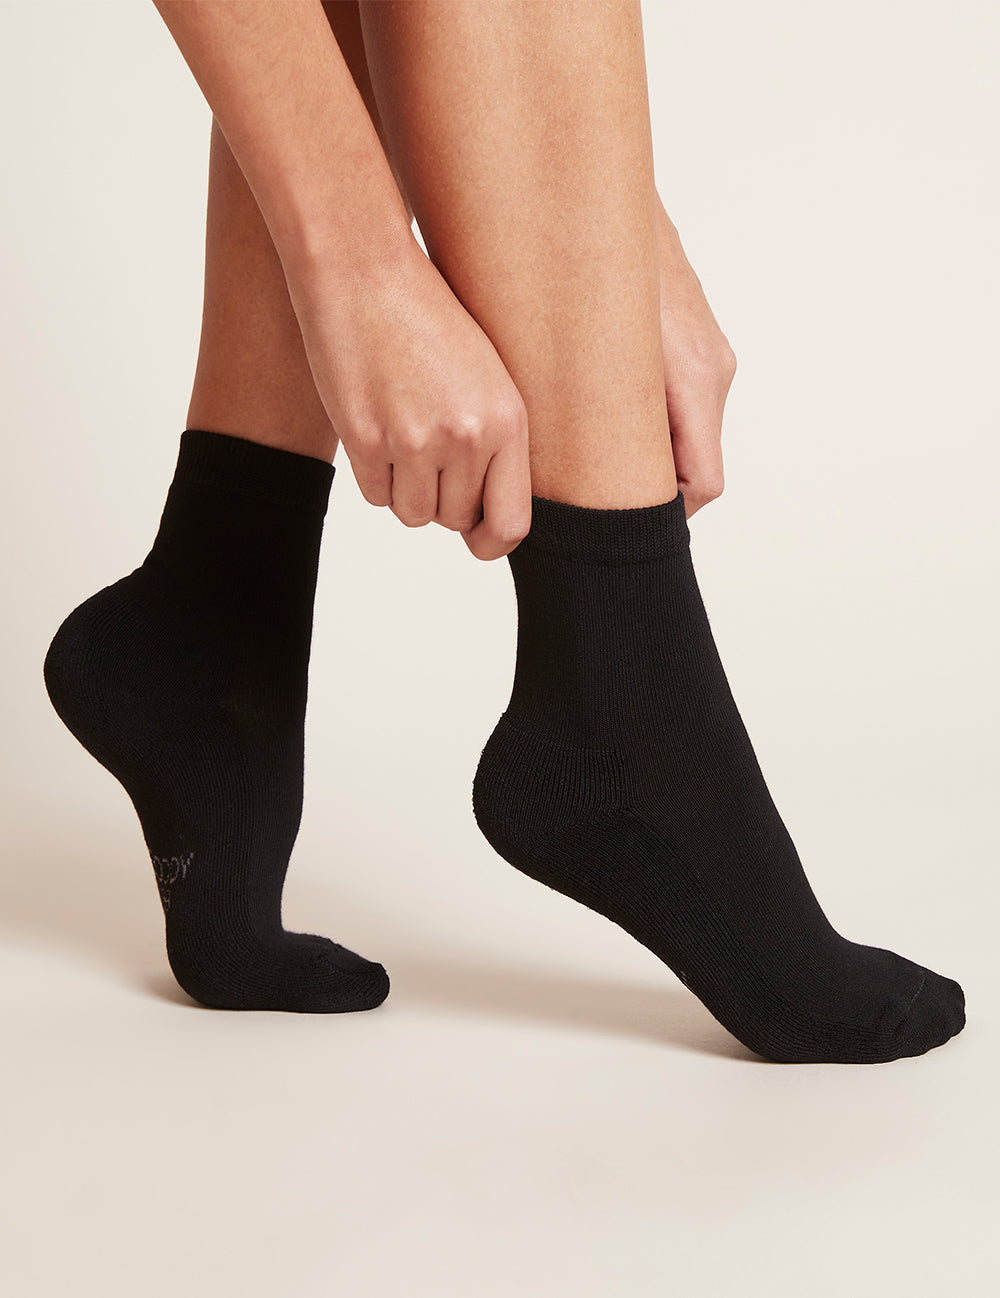 Women_s-Everyday-Ankle-Socks-2.0-Black-Side-1_8b52ec81-6958-4e52-b352-3df1b9d6b0b0.jpg